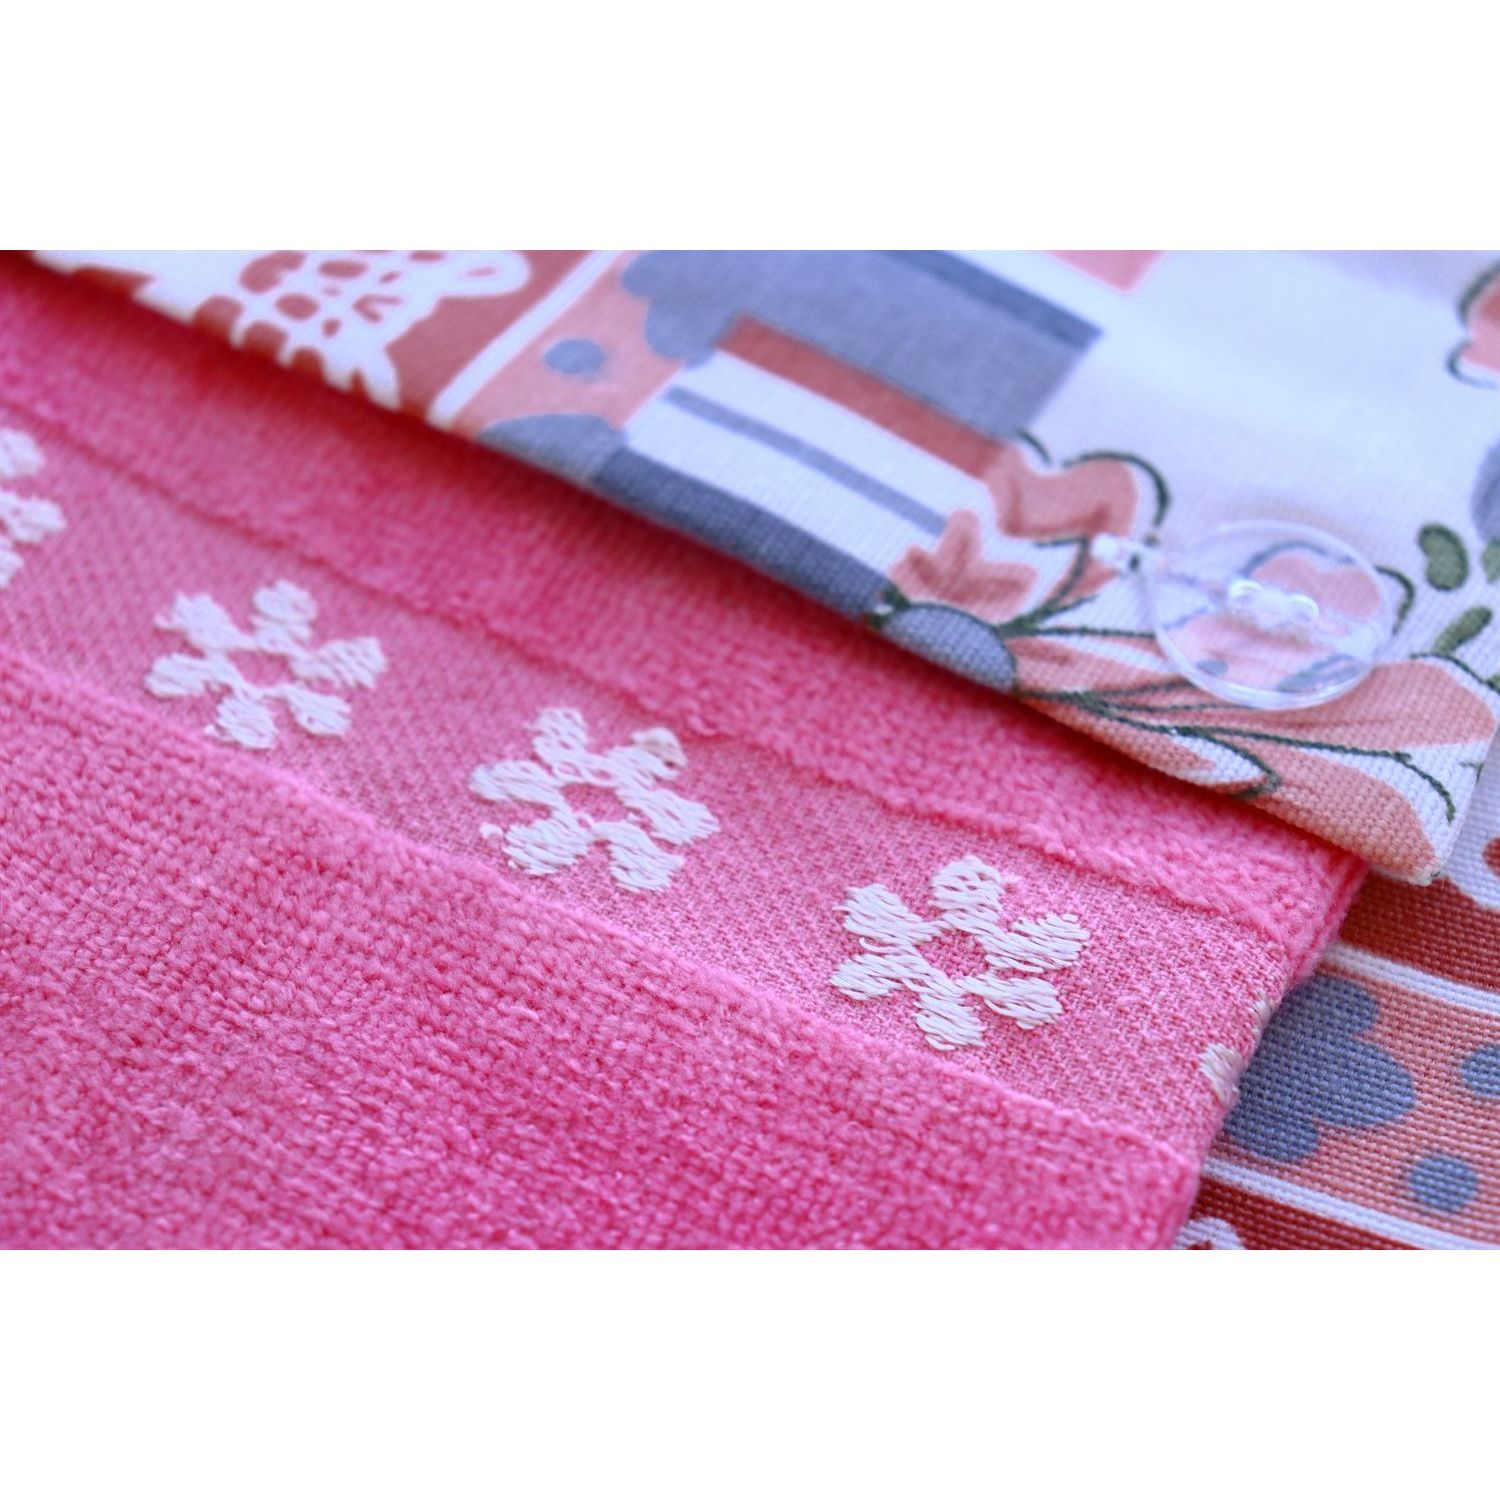 Набор для кухни IzziHome Flowers фартук + полотенце розовое (607737) - фото 3